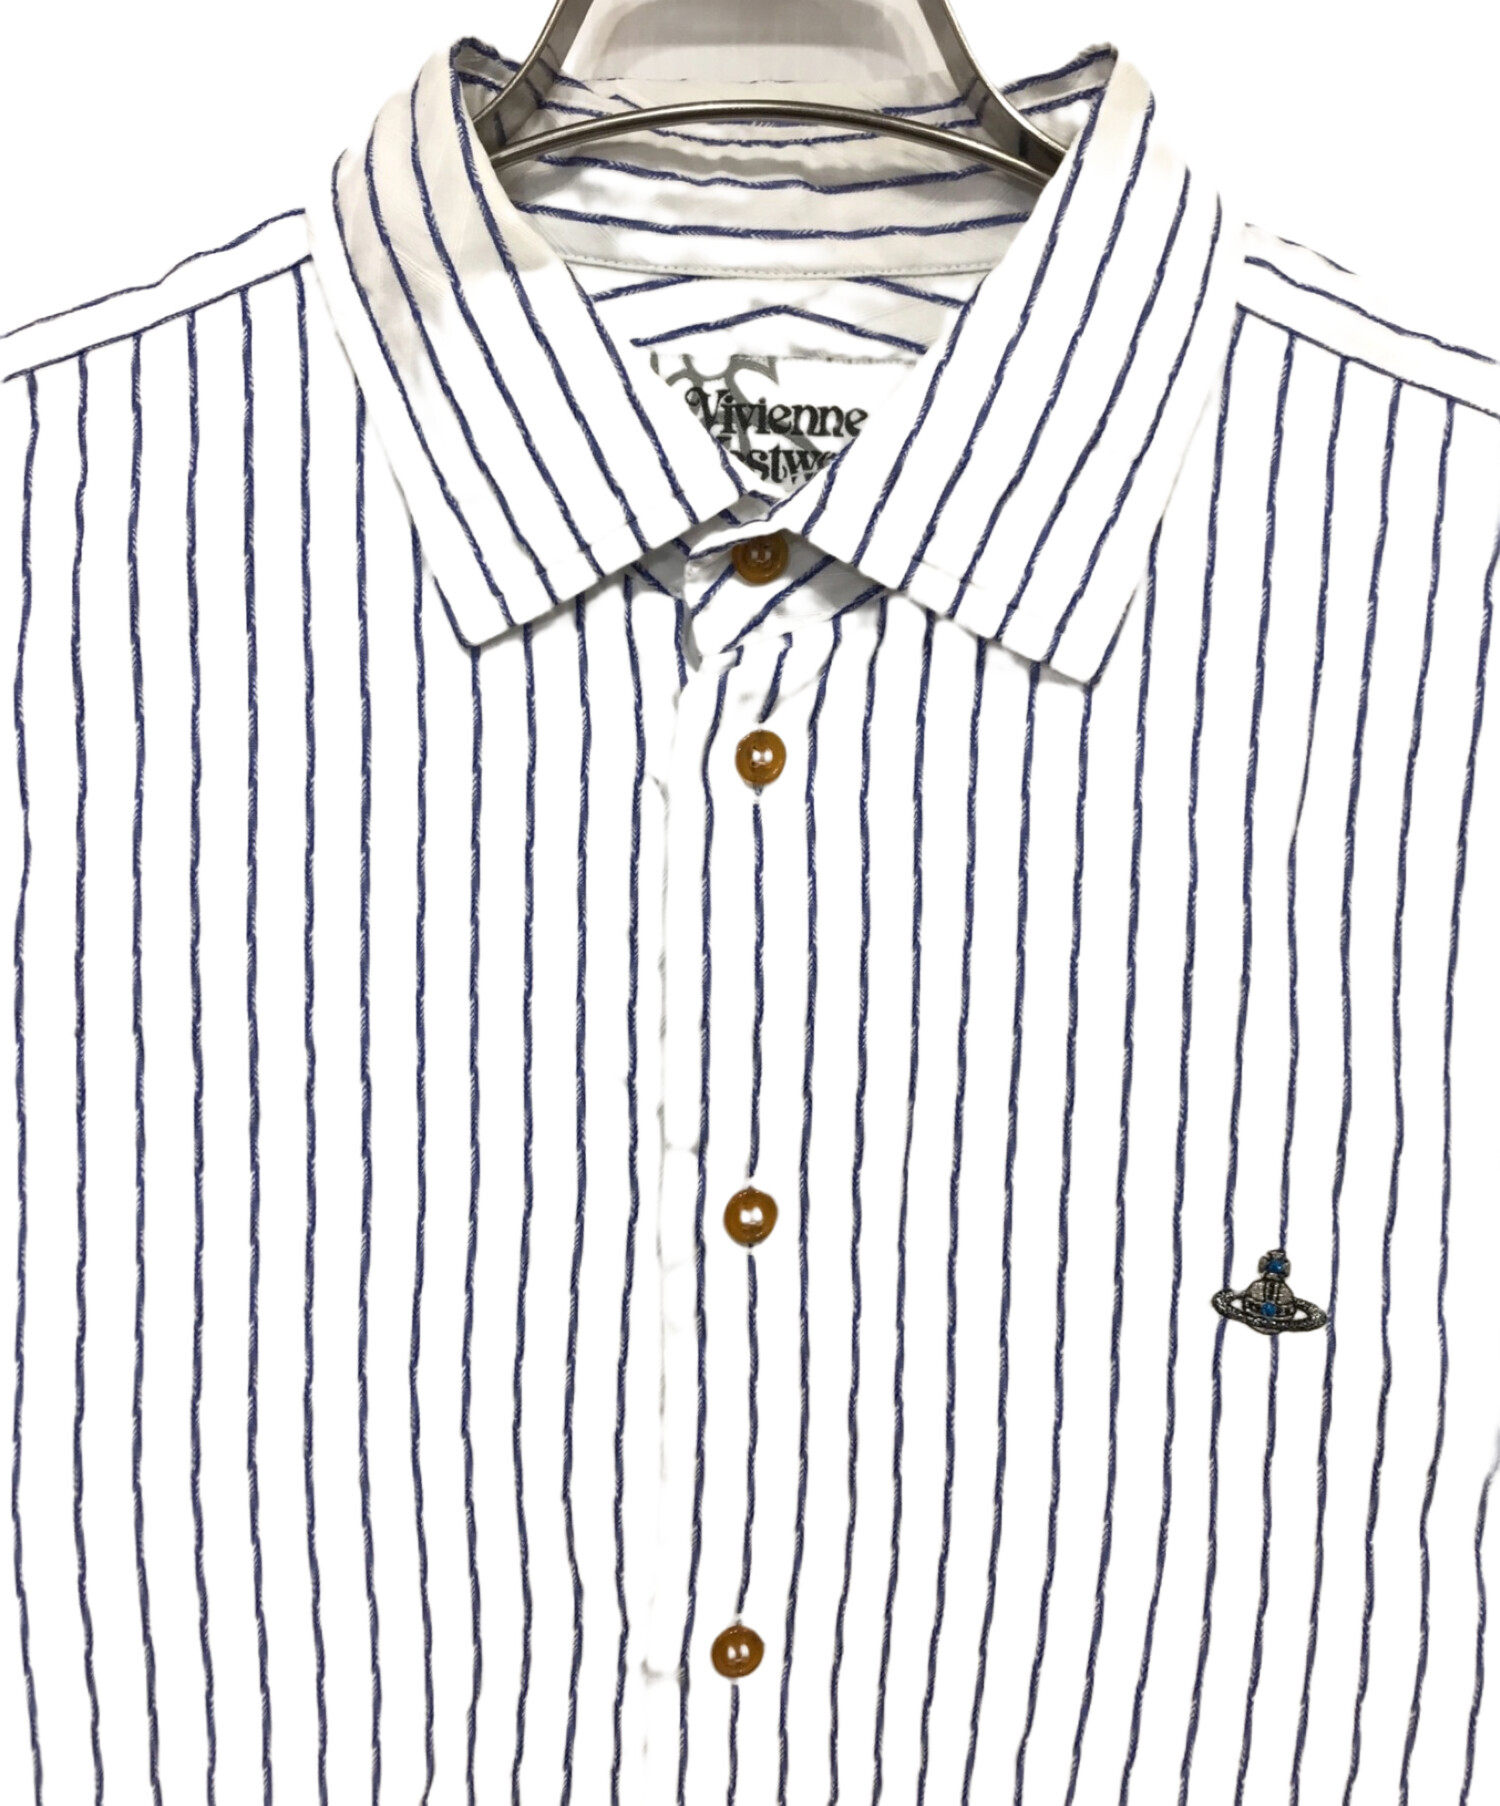 Vivienne Westwood man (ヴィヴィアン ウェストウッド マン) オーブ刺繍ストライプシャツ ブルー×ホワイト サイズ:48